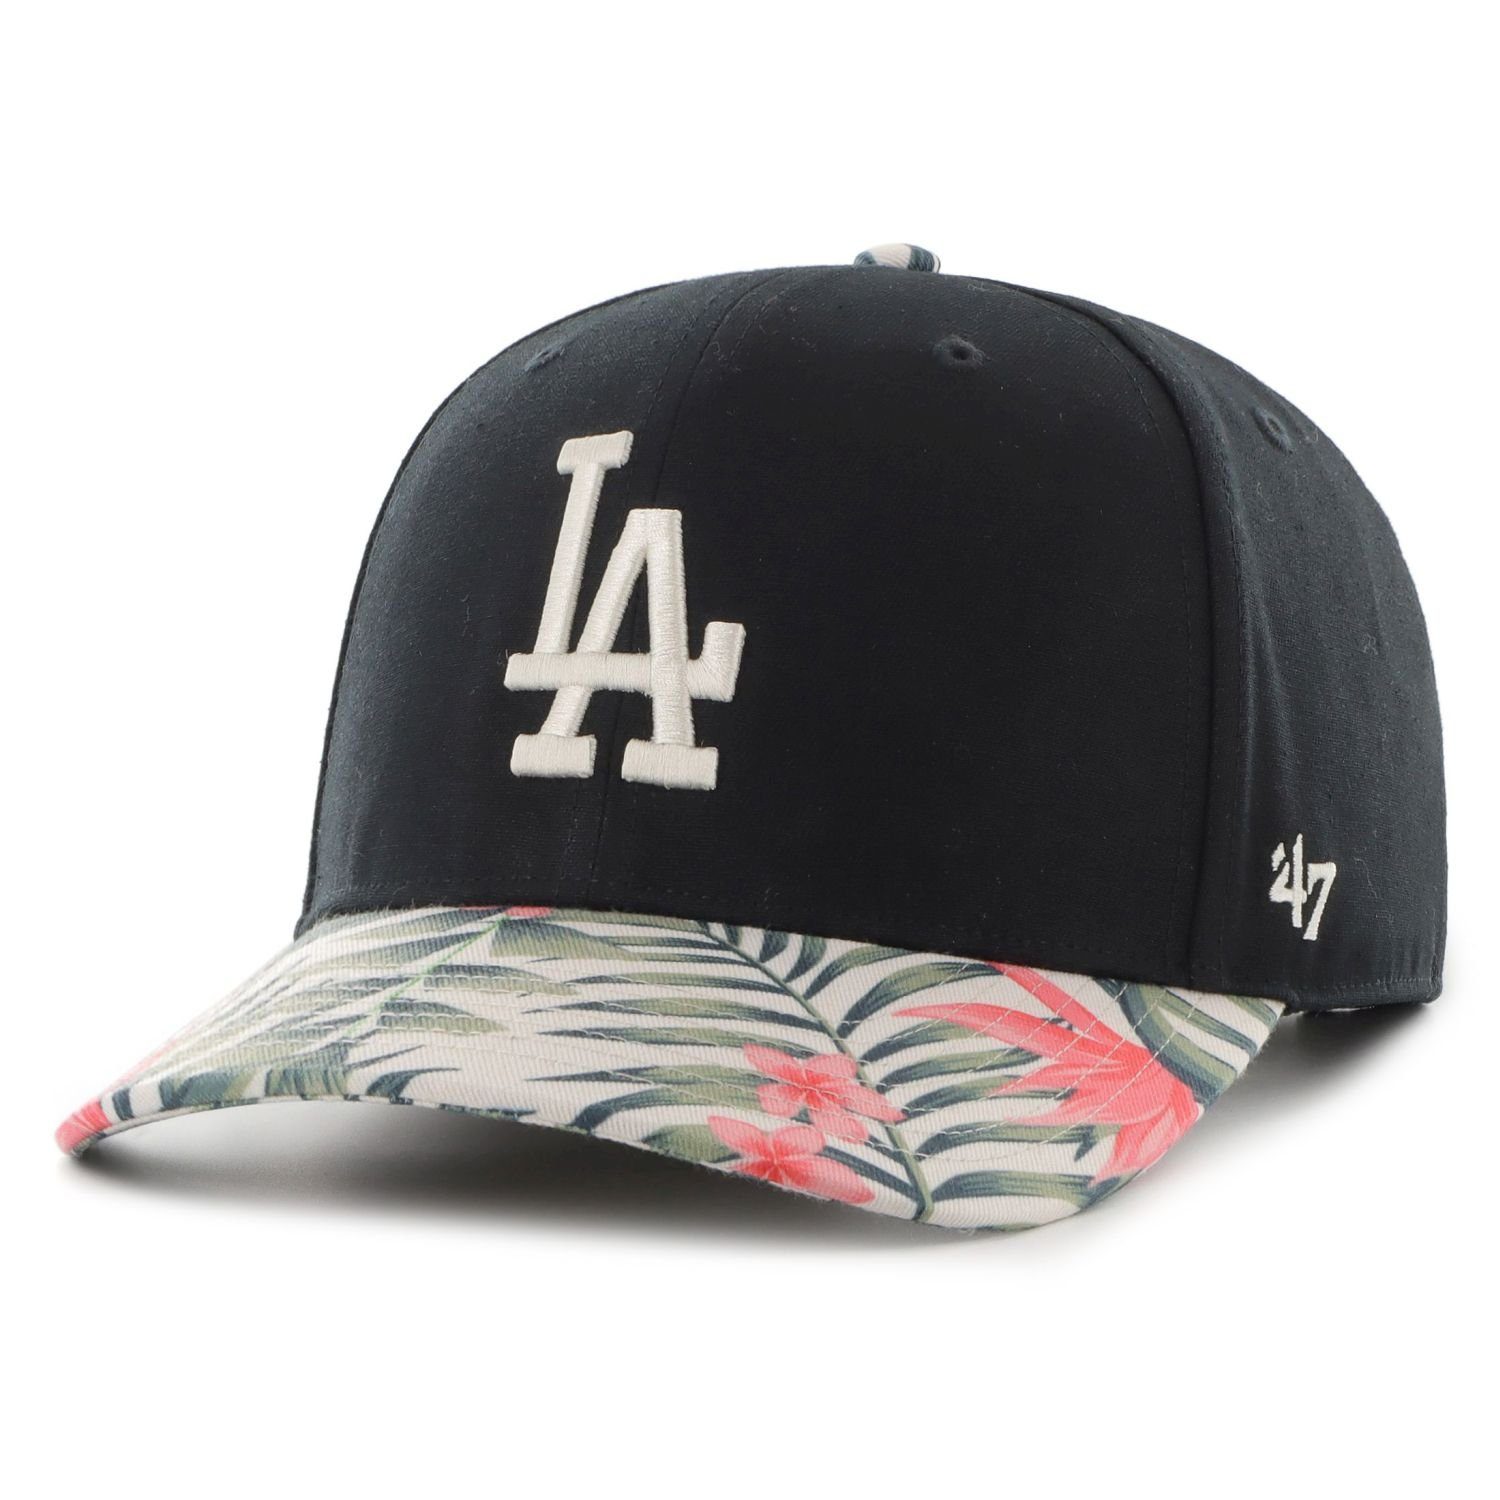 '47 Brand Snapback Cap COASTAL FLORAL Los Angeles Dodgers